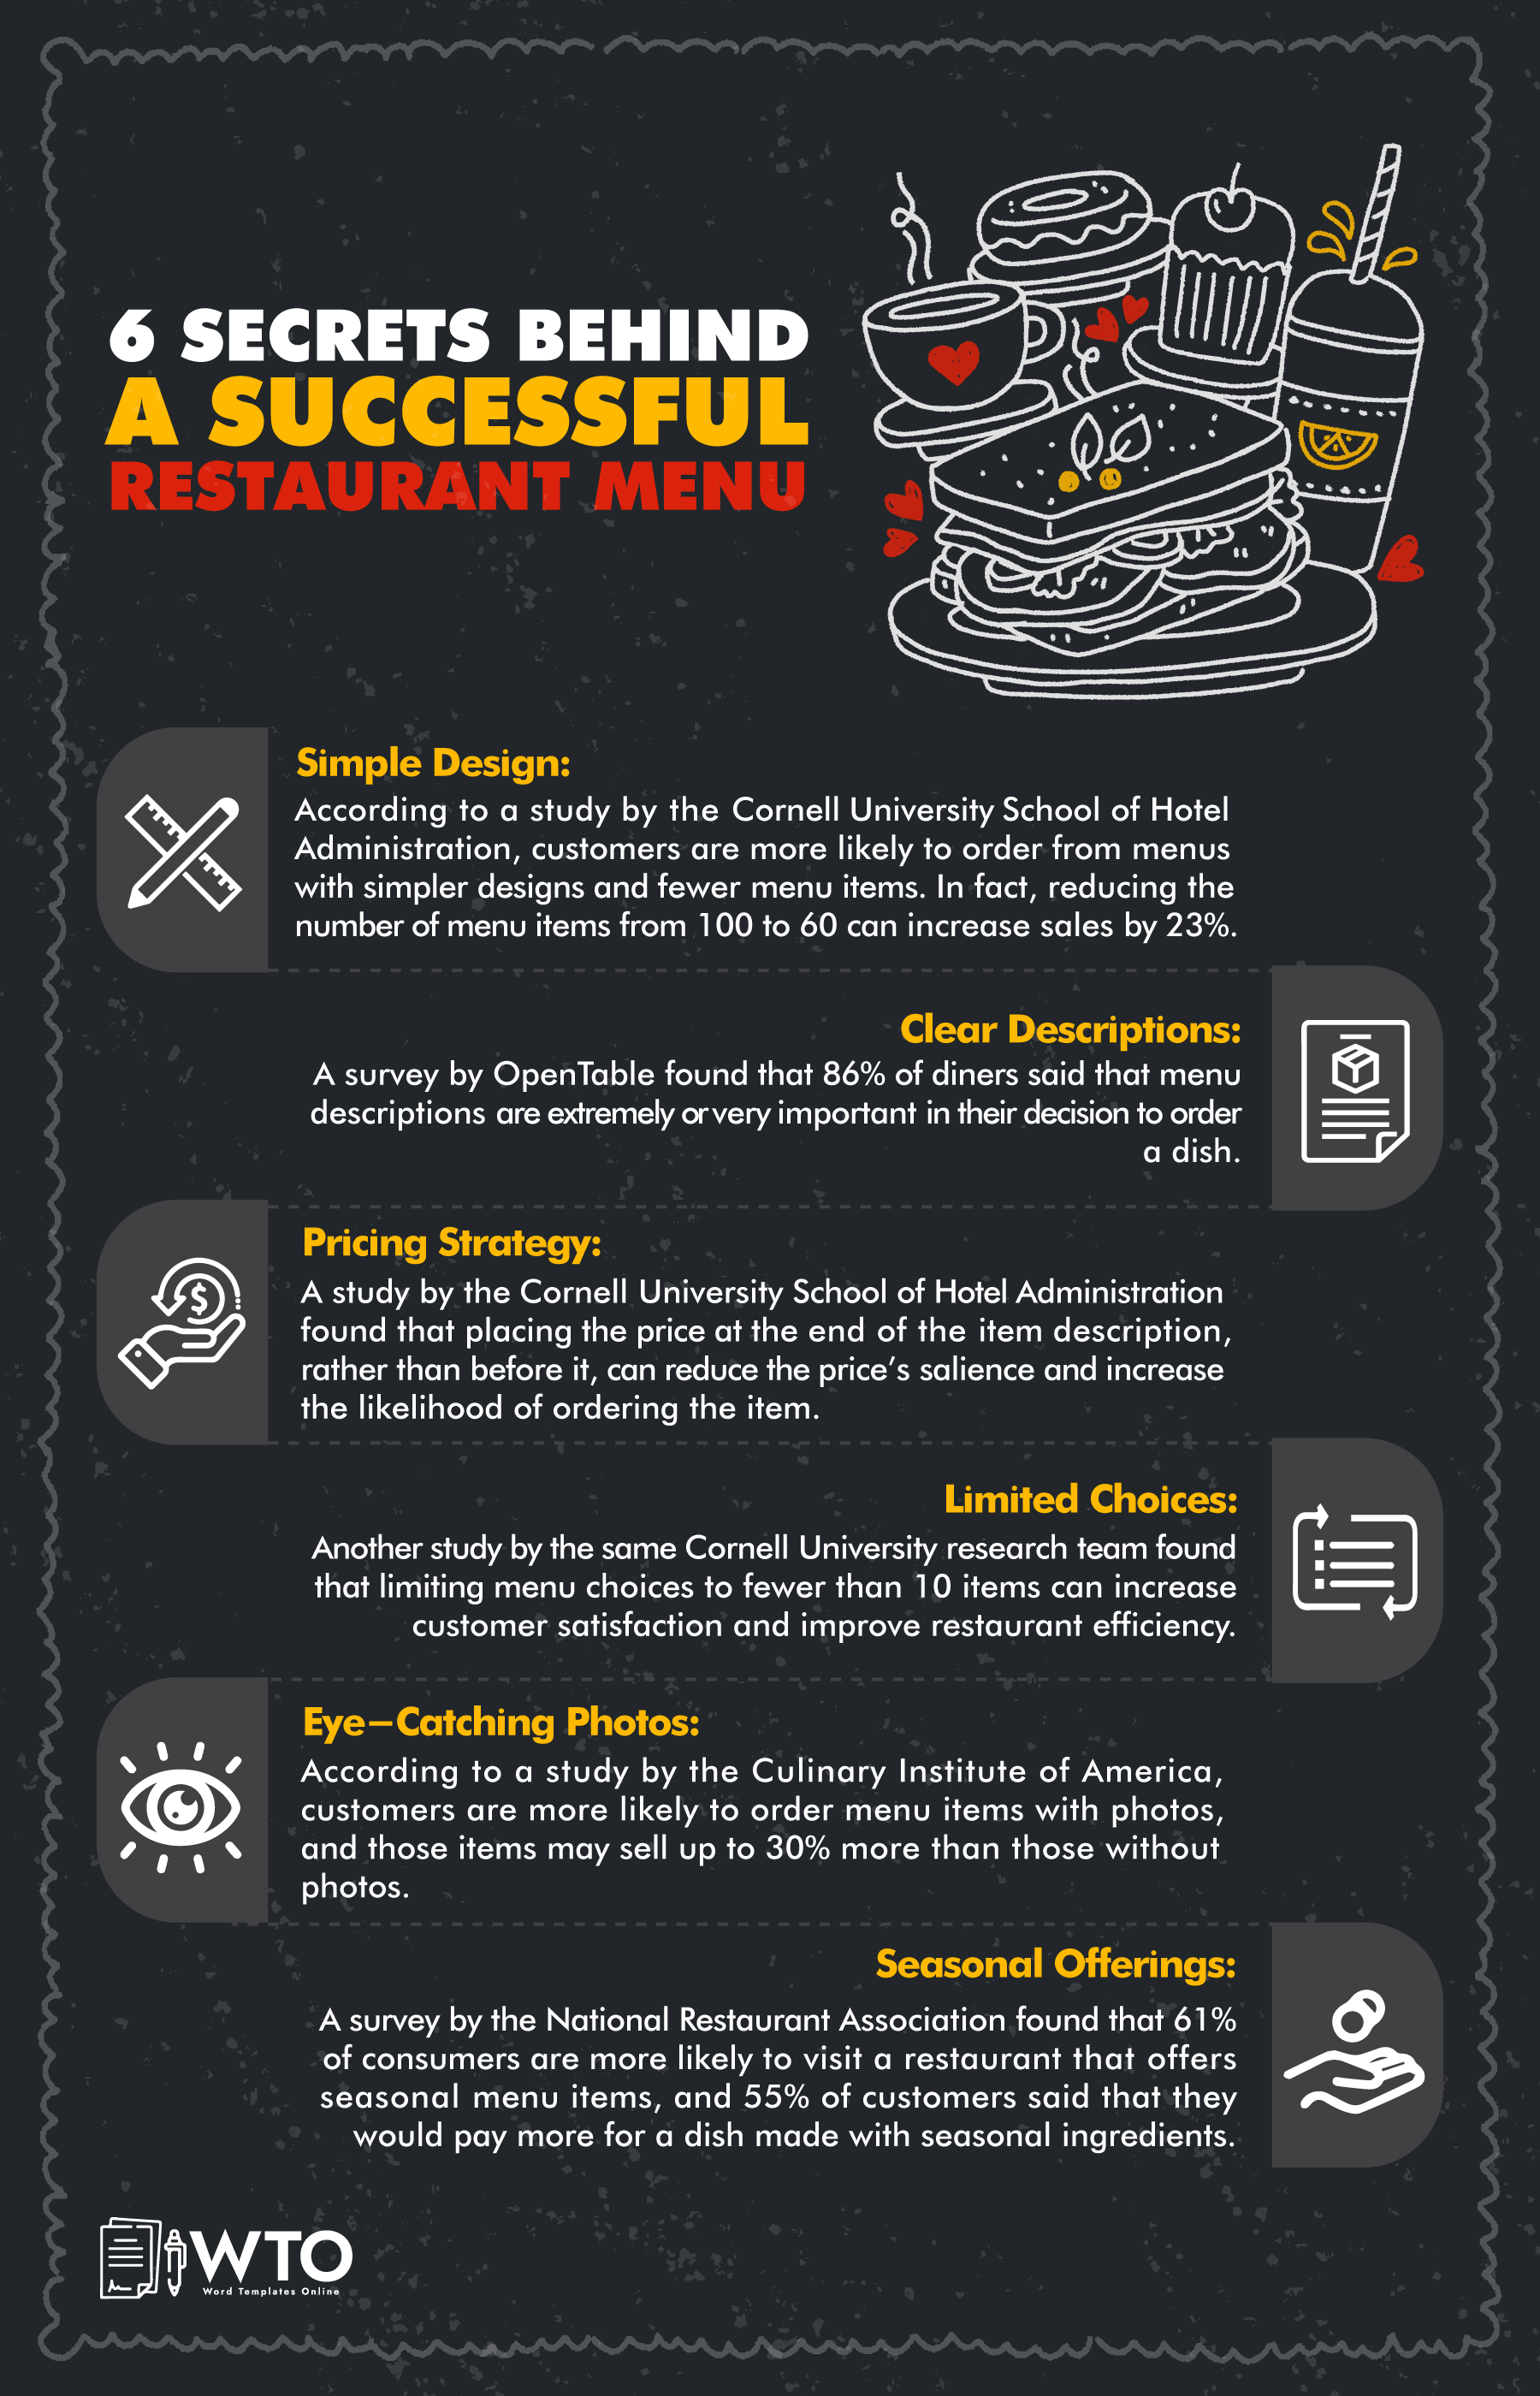 Infographic: secrets behind a successful restaurant menu